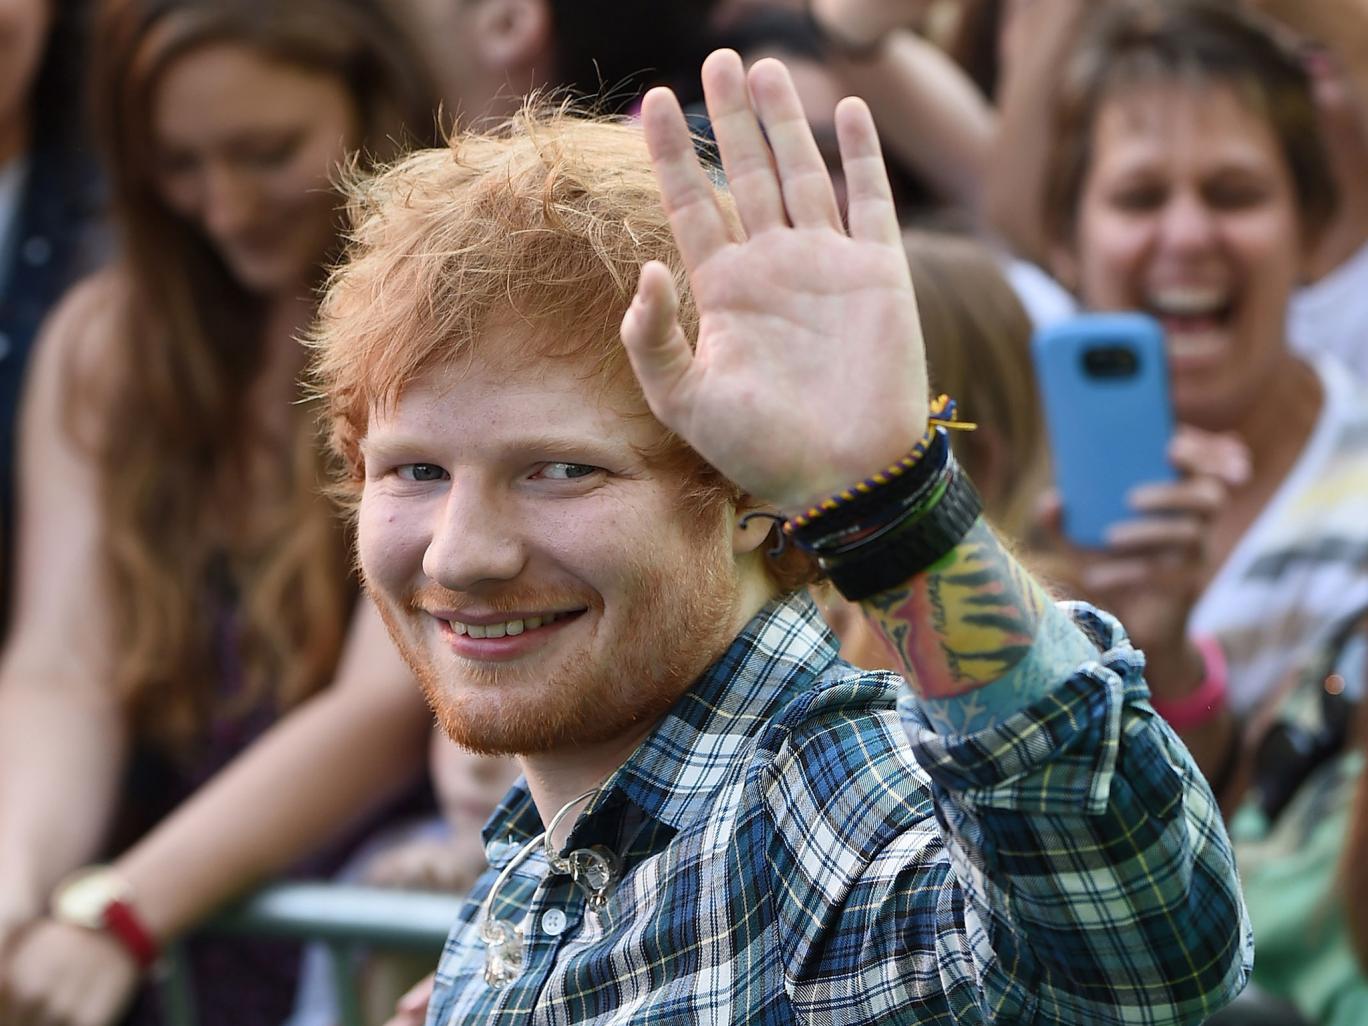 Ed Sheeran opens up in Disney+ docuseries “The Sum of It All”